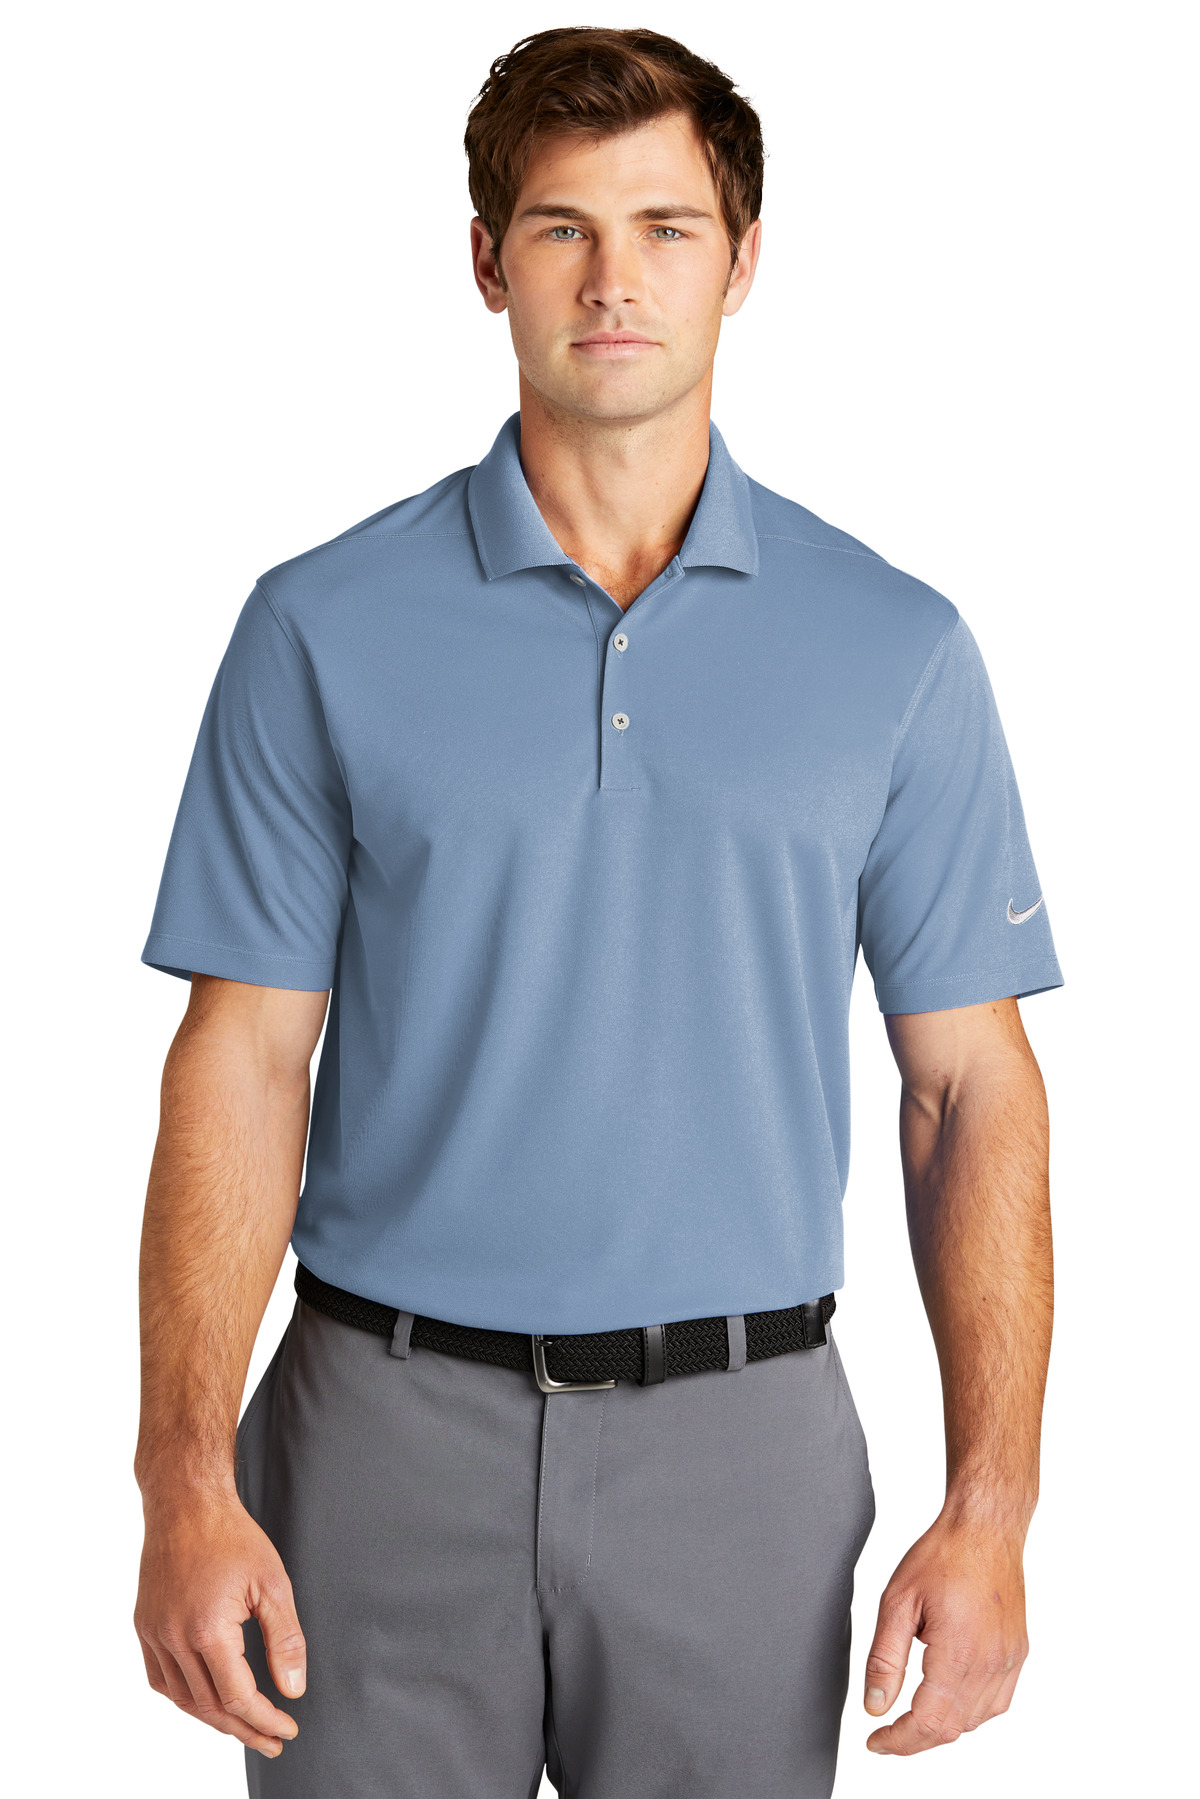 Nike Golf 319966 Dri-FIT Classic Tipped Polo Shirts